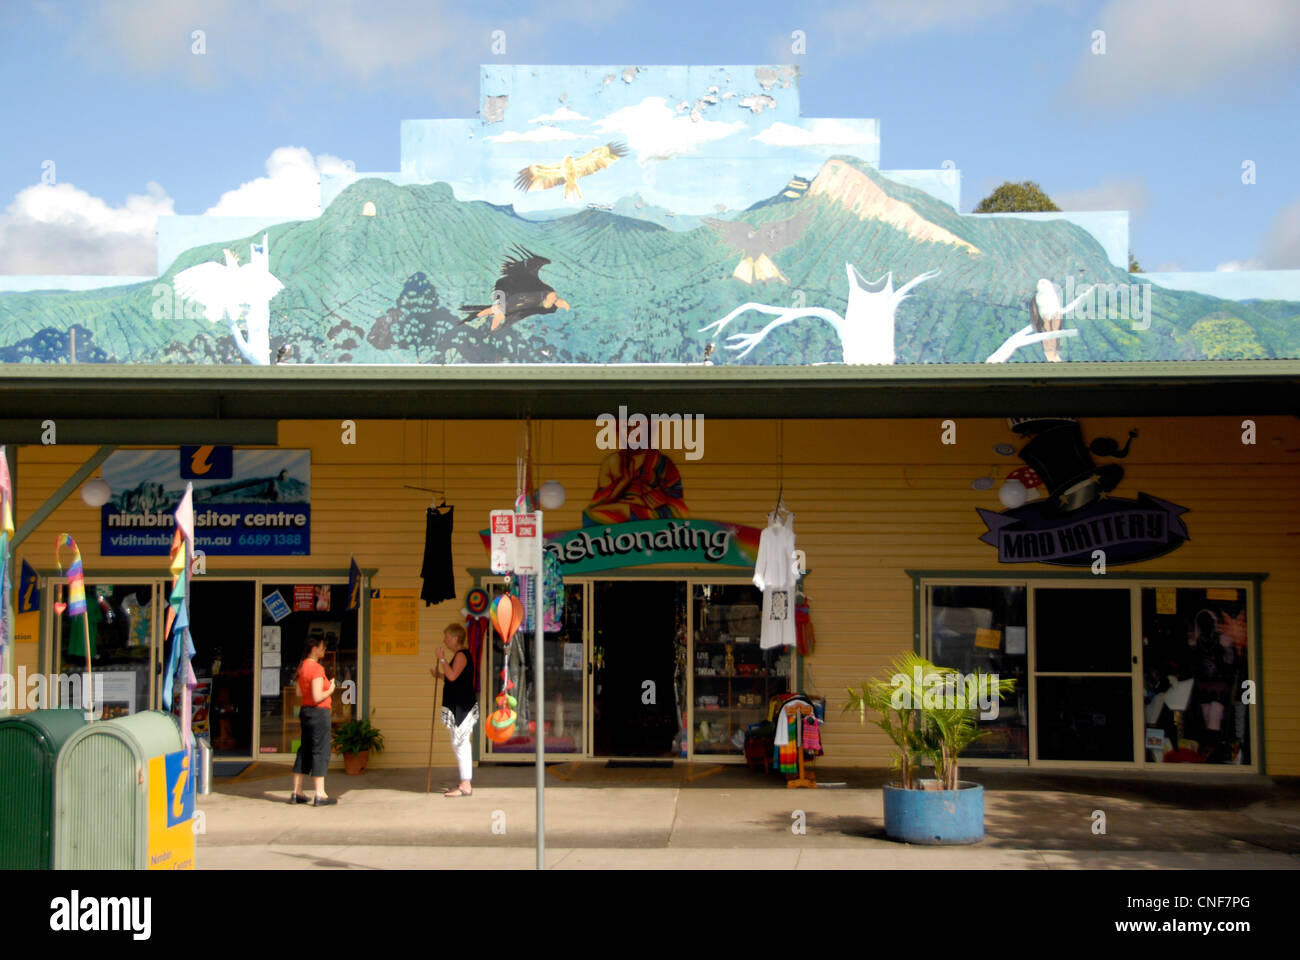 Painted shop fronts Nimbin, NSW, Australia Stock Photo